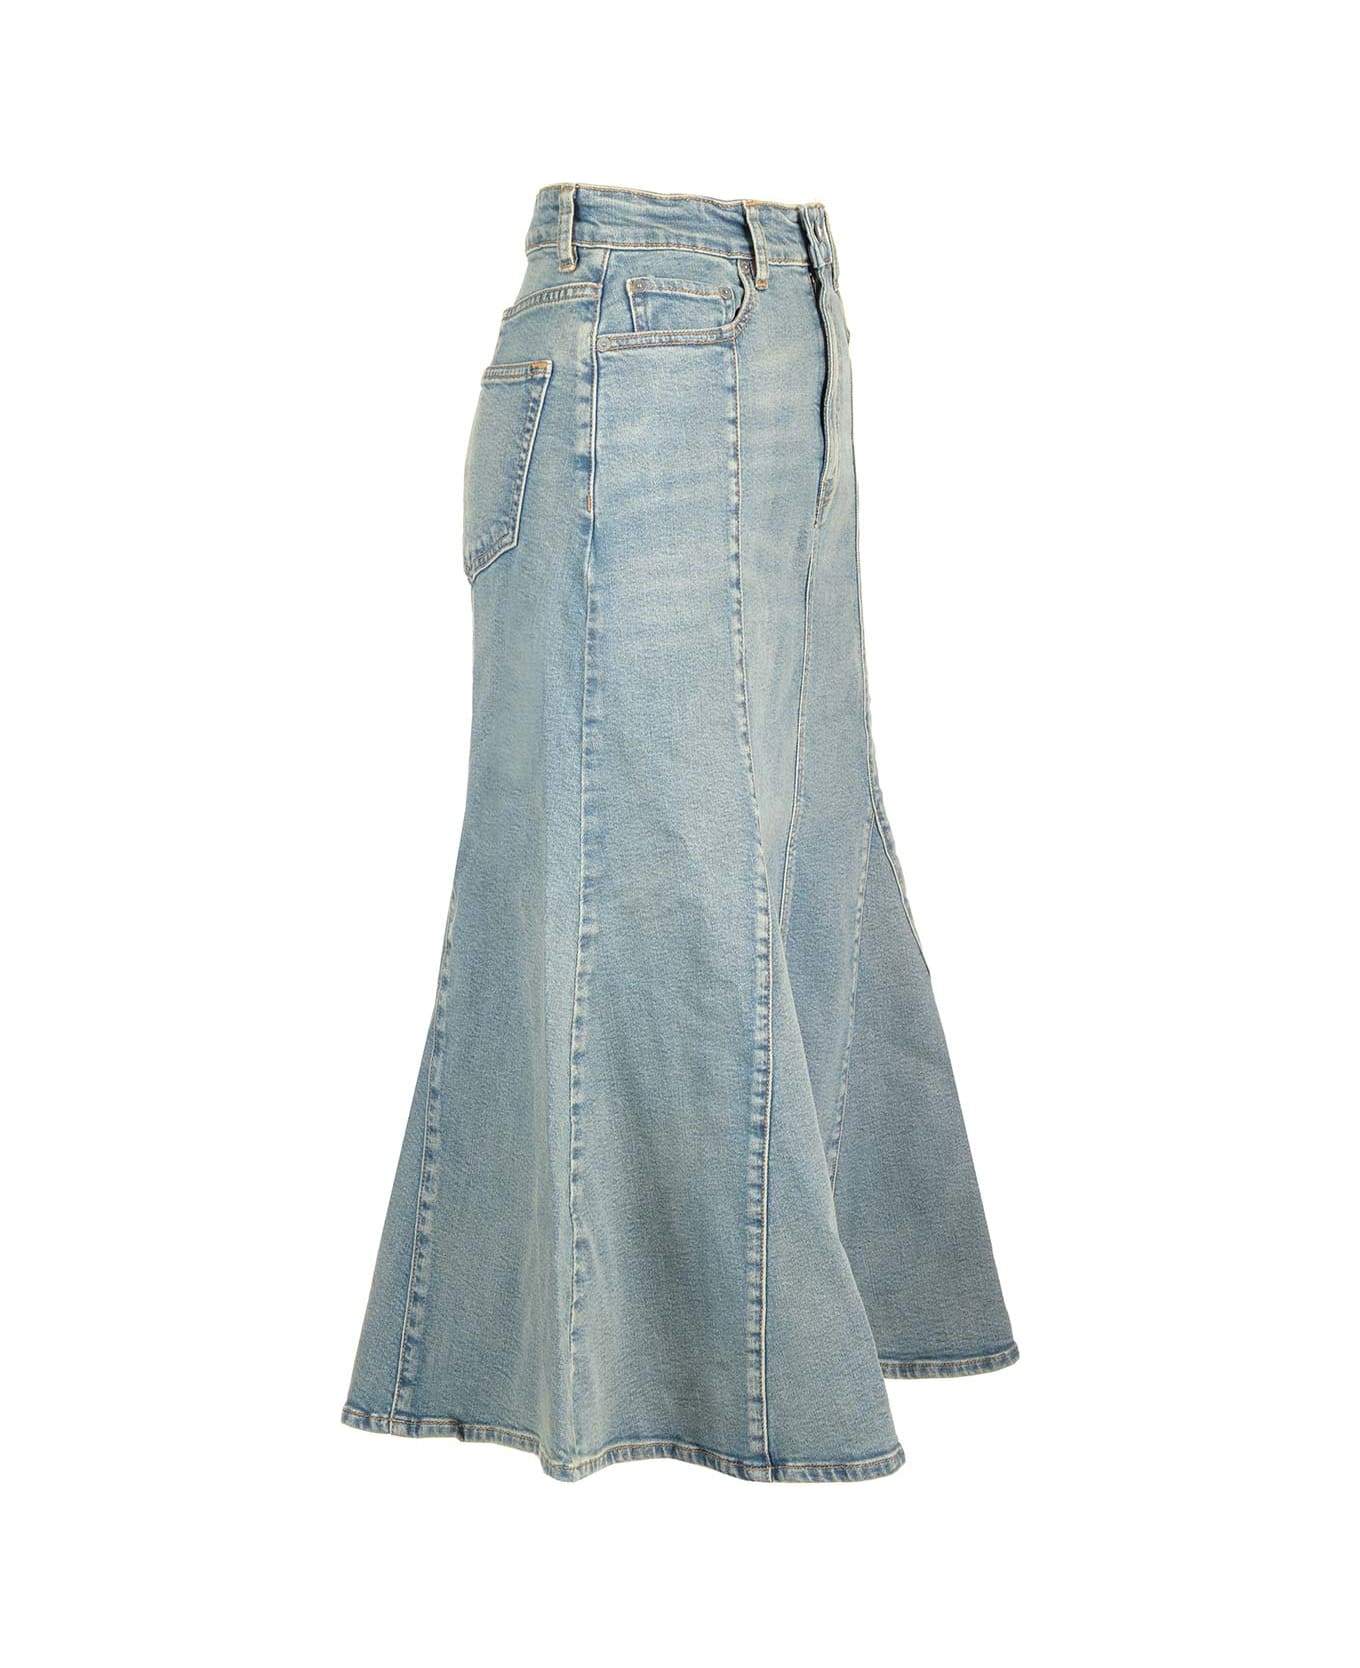 Ganni Peplum Midi Skirt - Stone Washed スカート